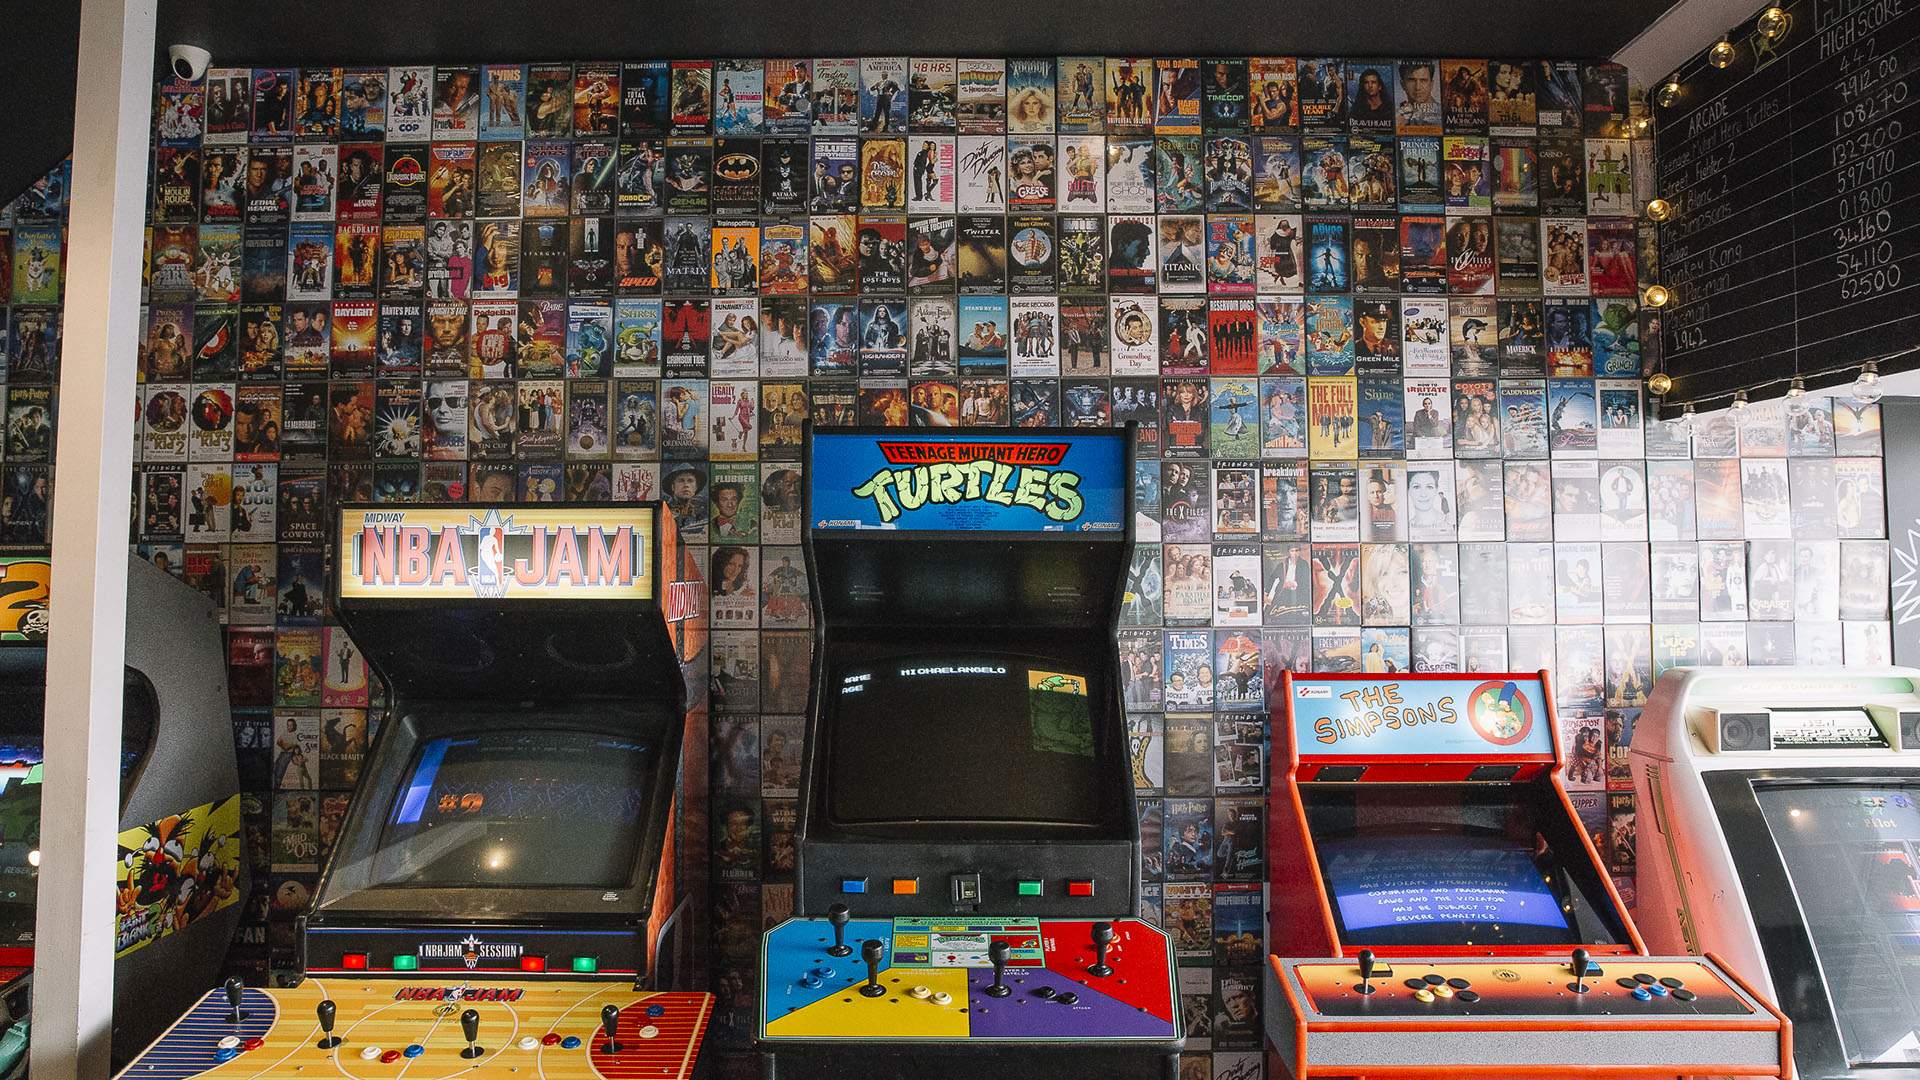 1989 arcade bar and kitchen